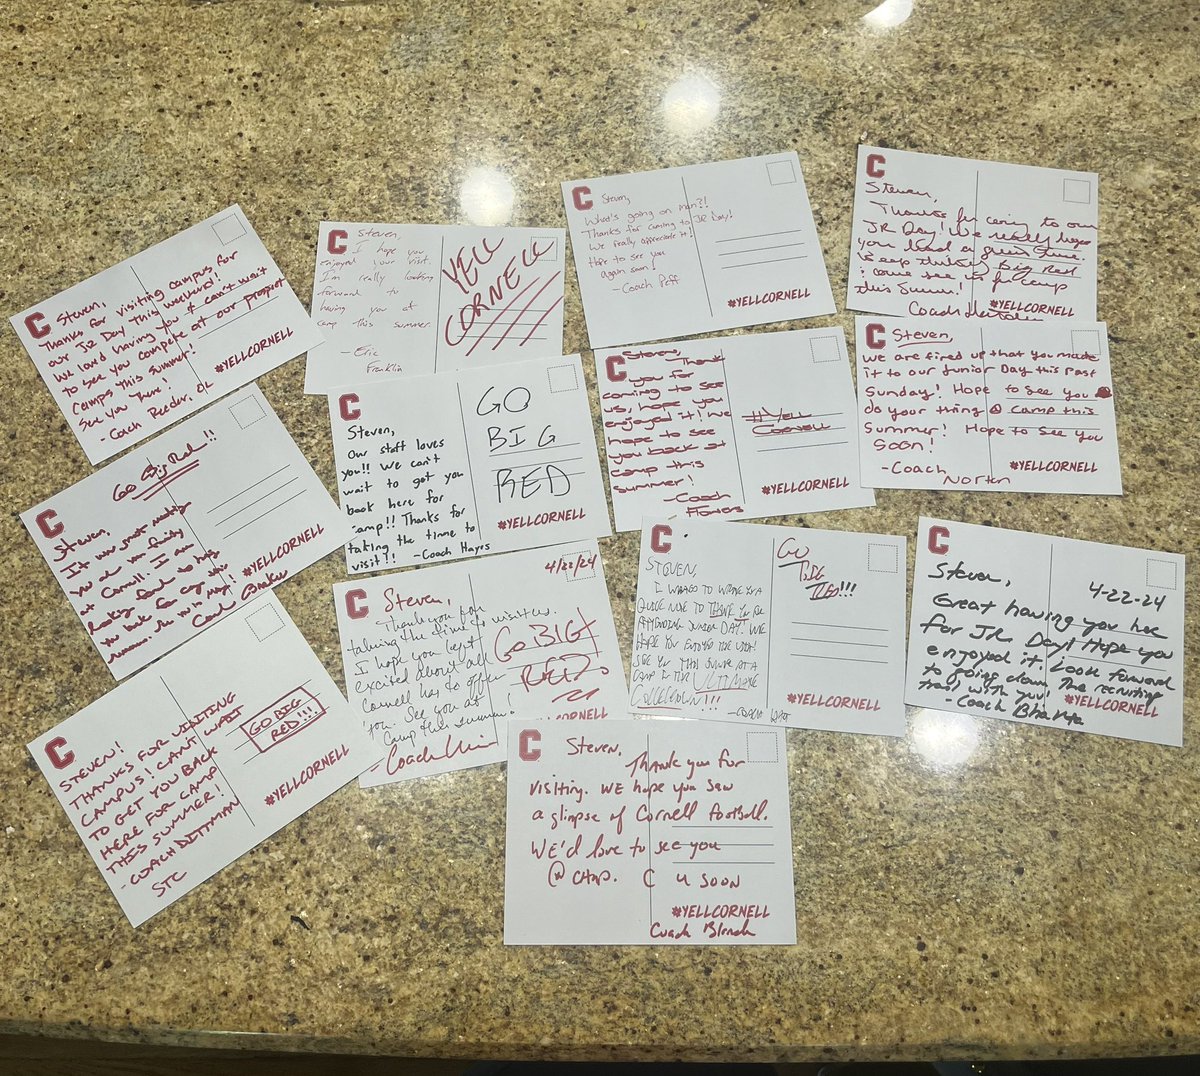 Thank you @BigRed_Football coaching staff for the hand written letters‼️‼️ #gobigred #yellcornell 

@JaredBackus1 @CoachPeff @CoachJDittman58 @DanSwanstrom @Sean_Reeder @TerryUrsin @Coach_Hatcher20 @BlandenCoach @CoachBhakta @CoachEFranklin